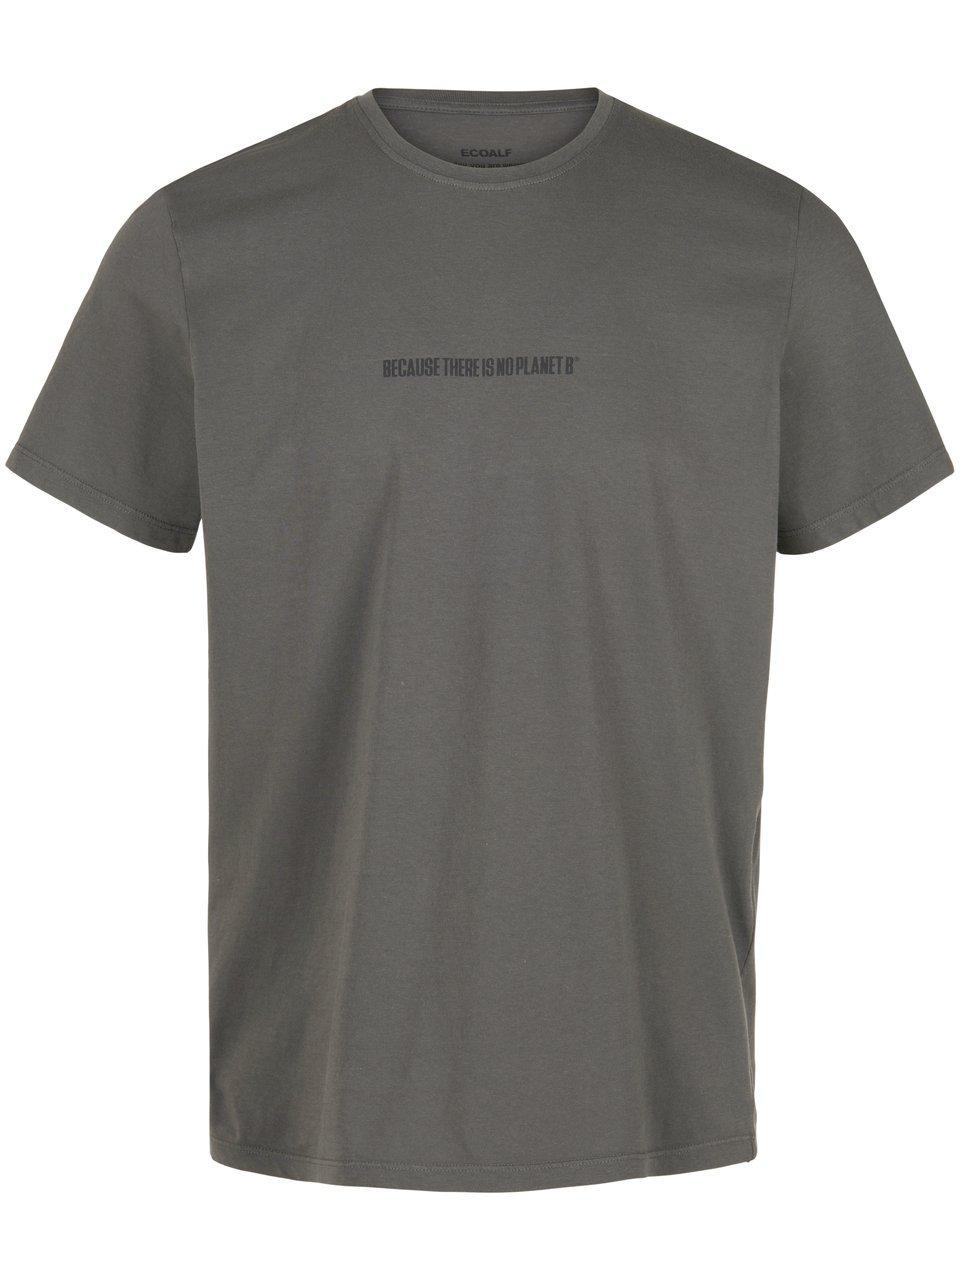 T-shirt Van Ecoalf grijs